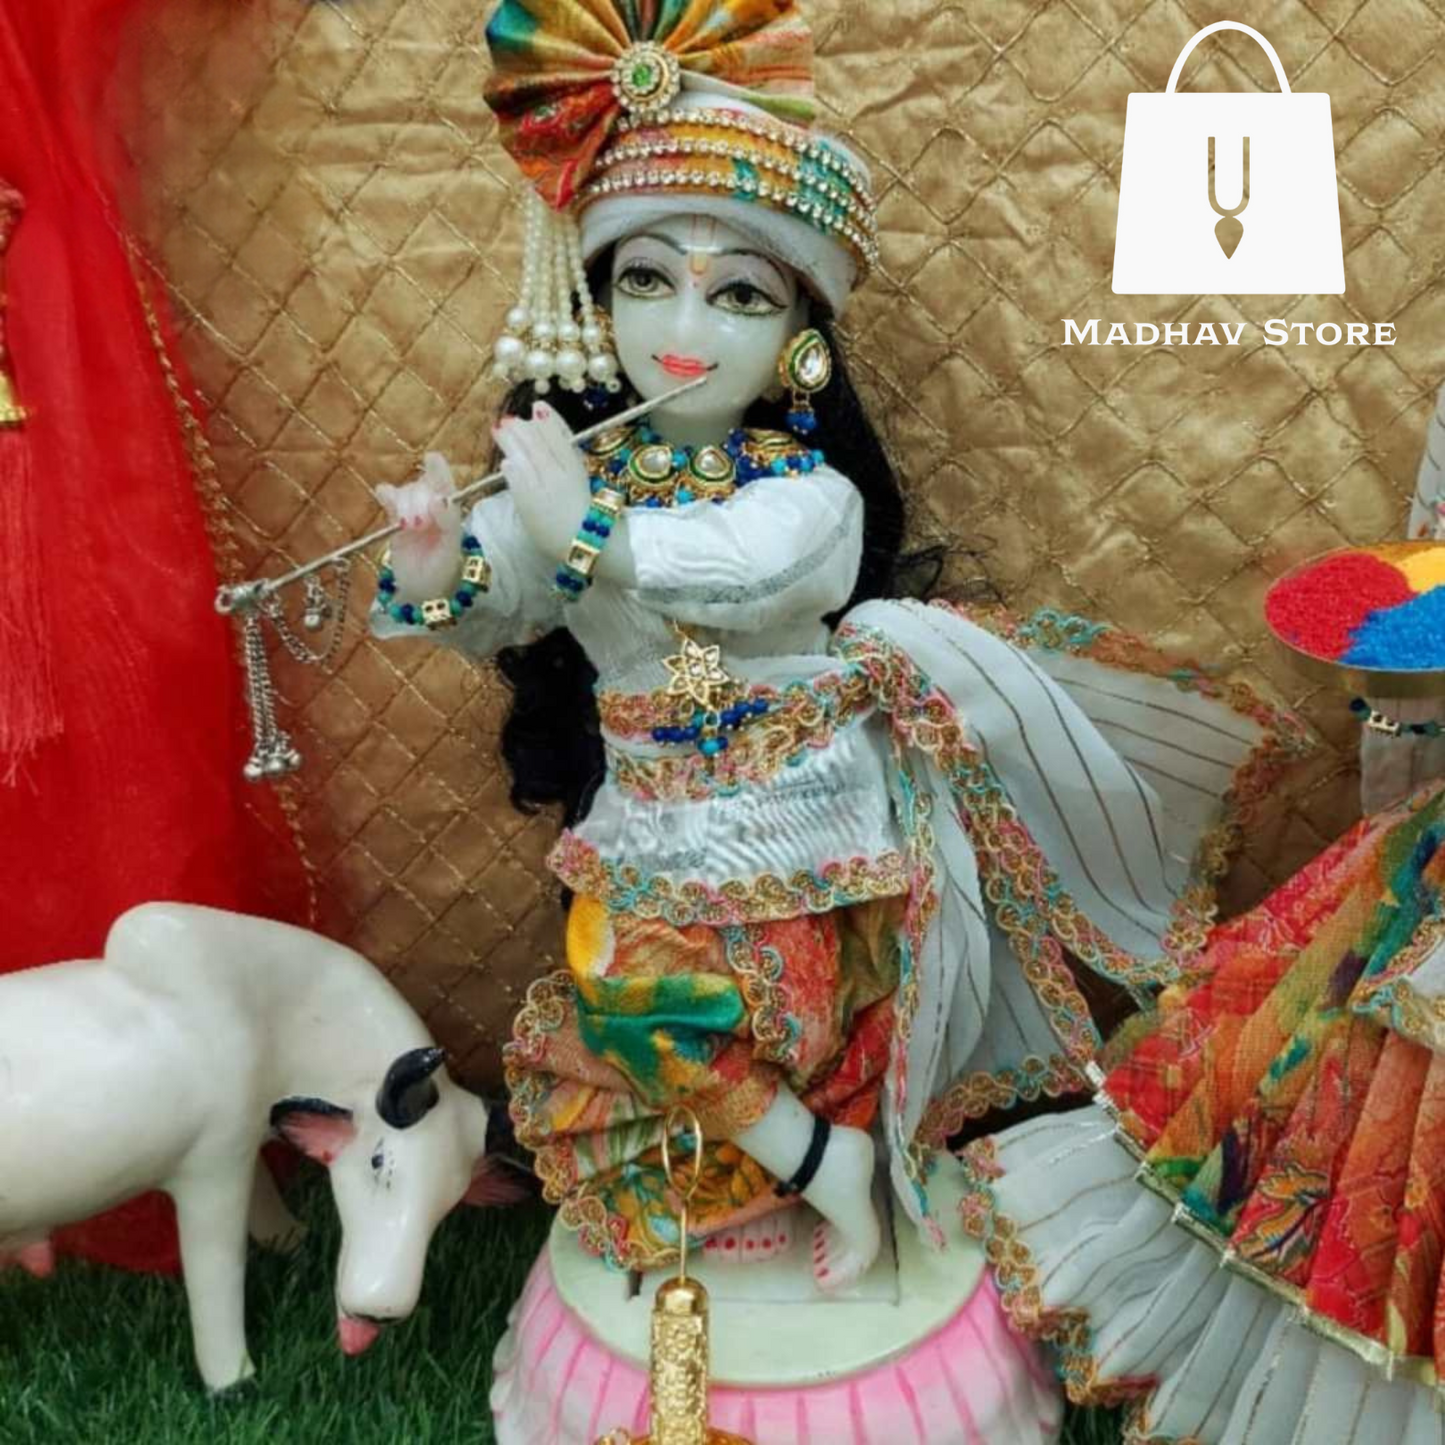 Vrindavan style colourful Dress for Radha Krishna